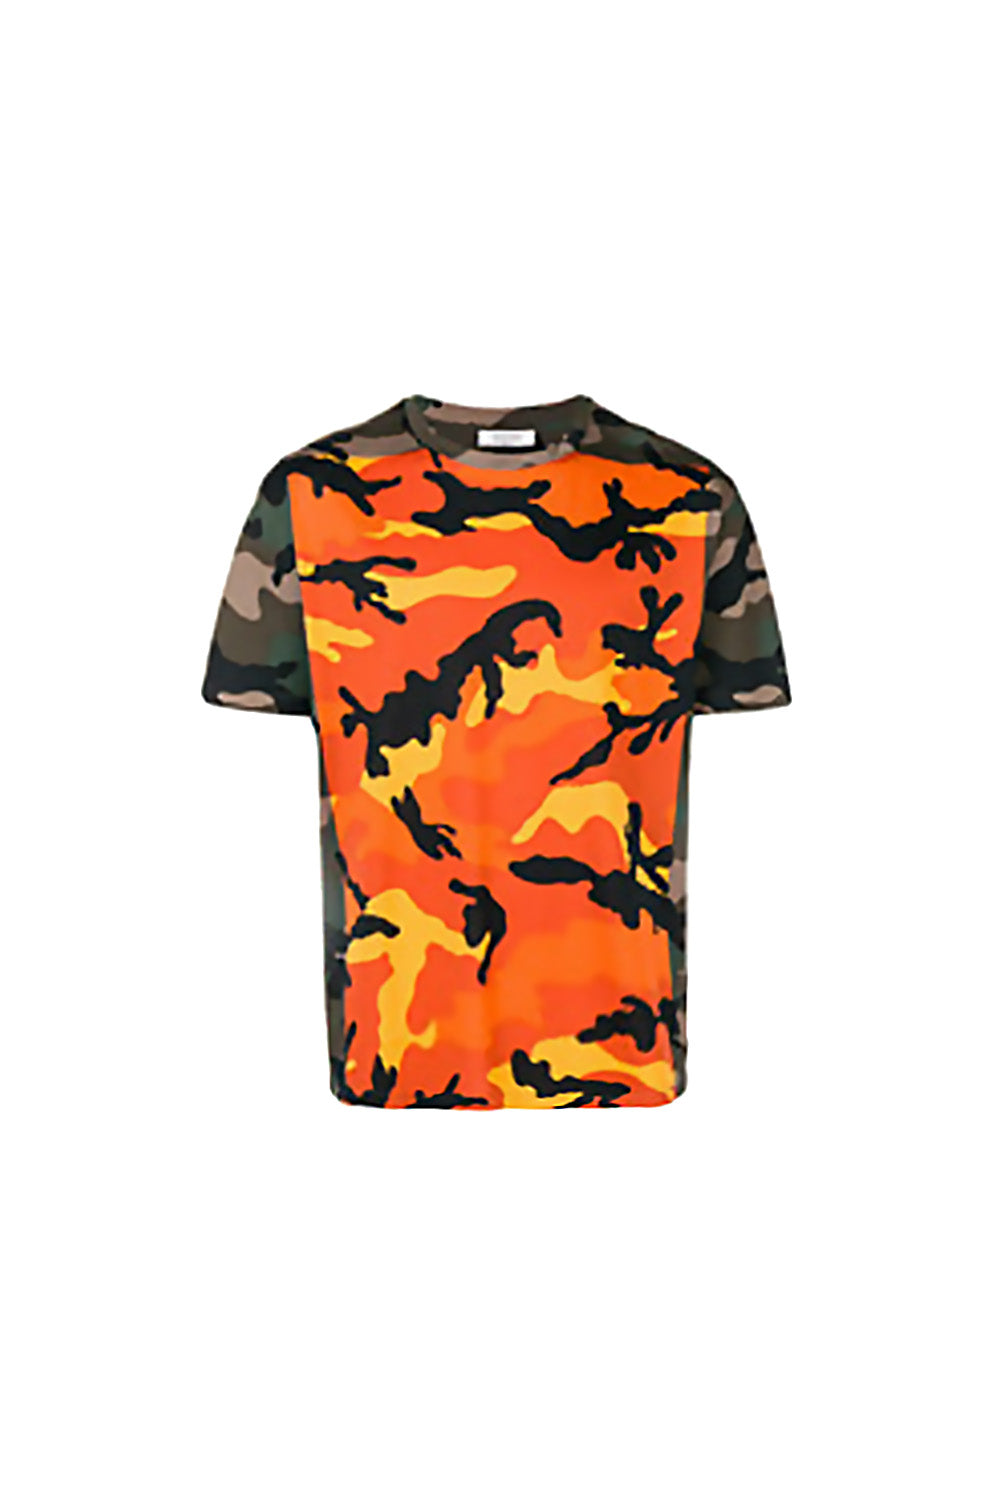 Valentino Garavani Rockstud Untitled T-shirt orange